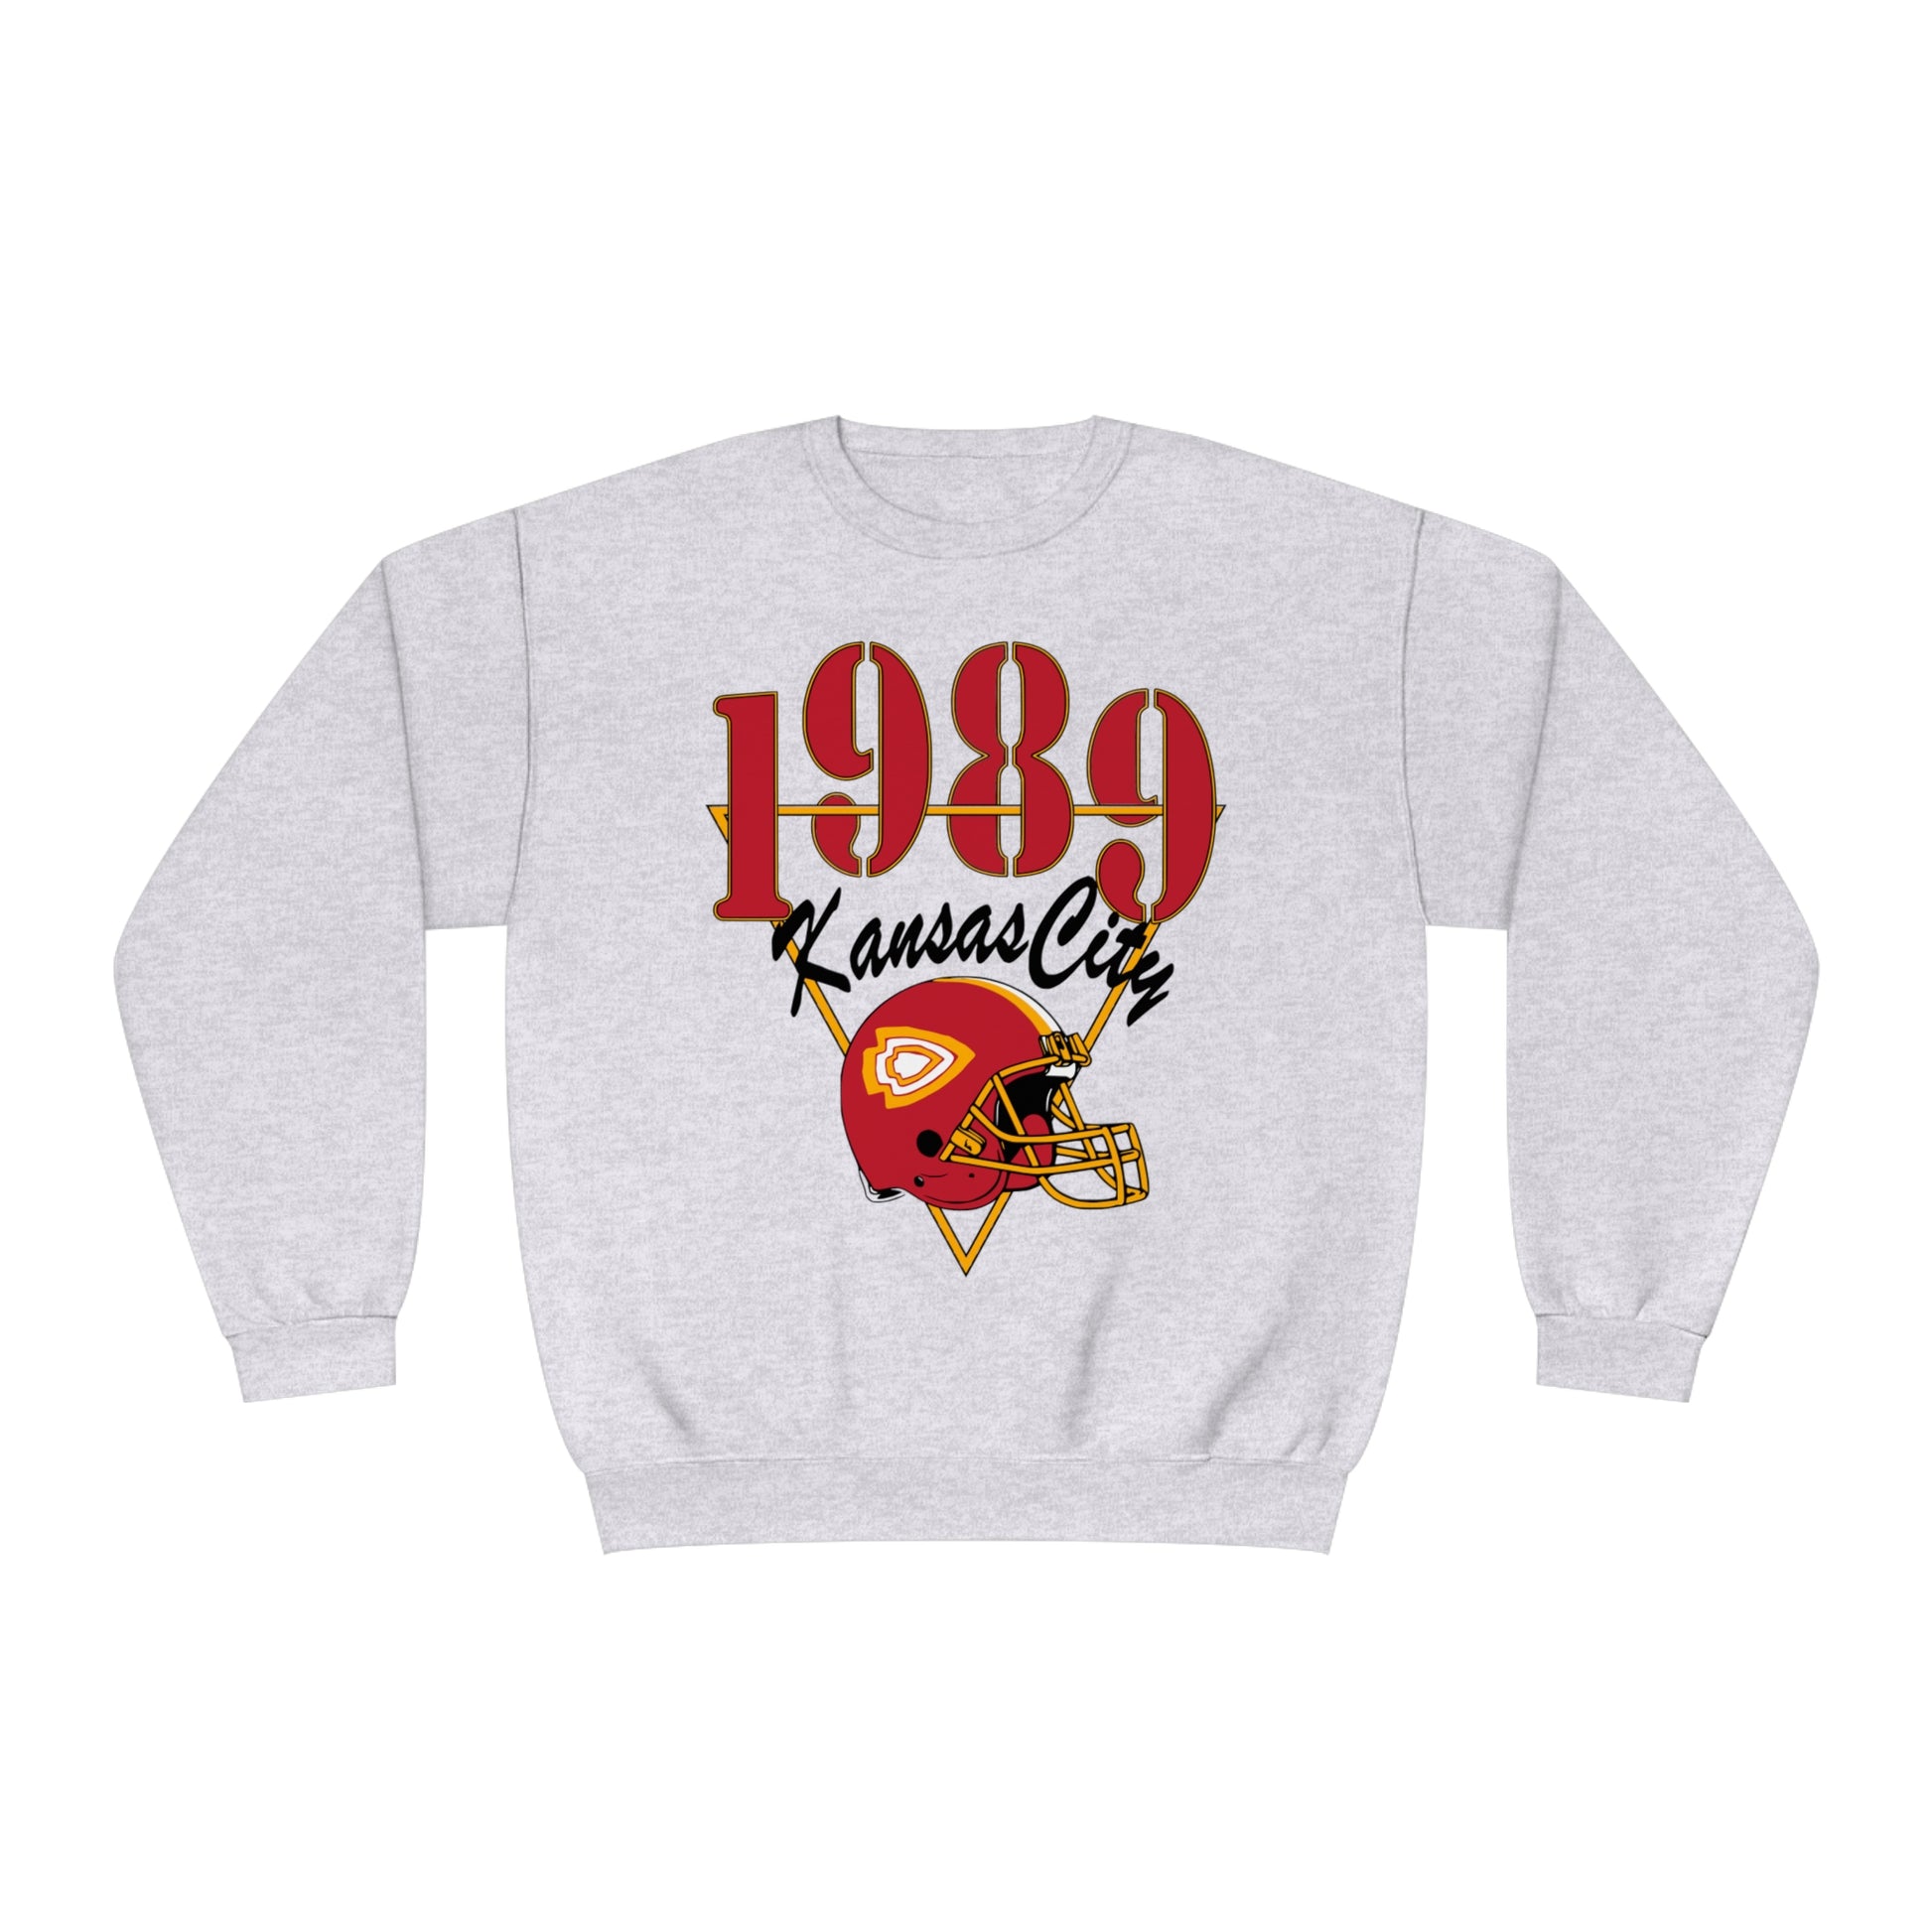 1989 Kansas City Chiefs Football Crewneck Sweatshirt - Vintage Retro Arrowhead Style - 1989 Version Chiefs Taylor Swift Ash Gray